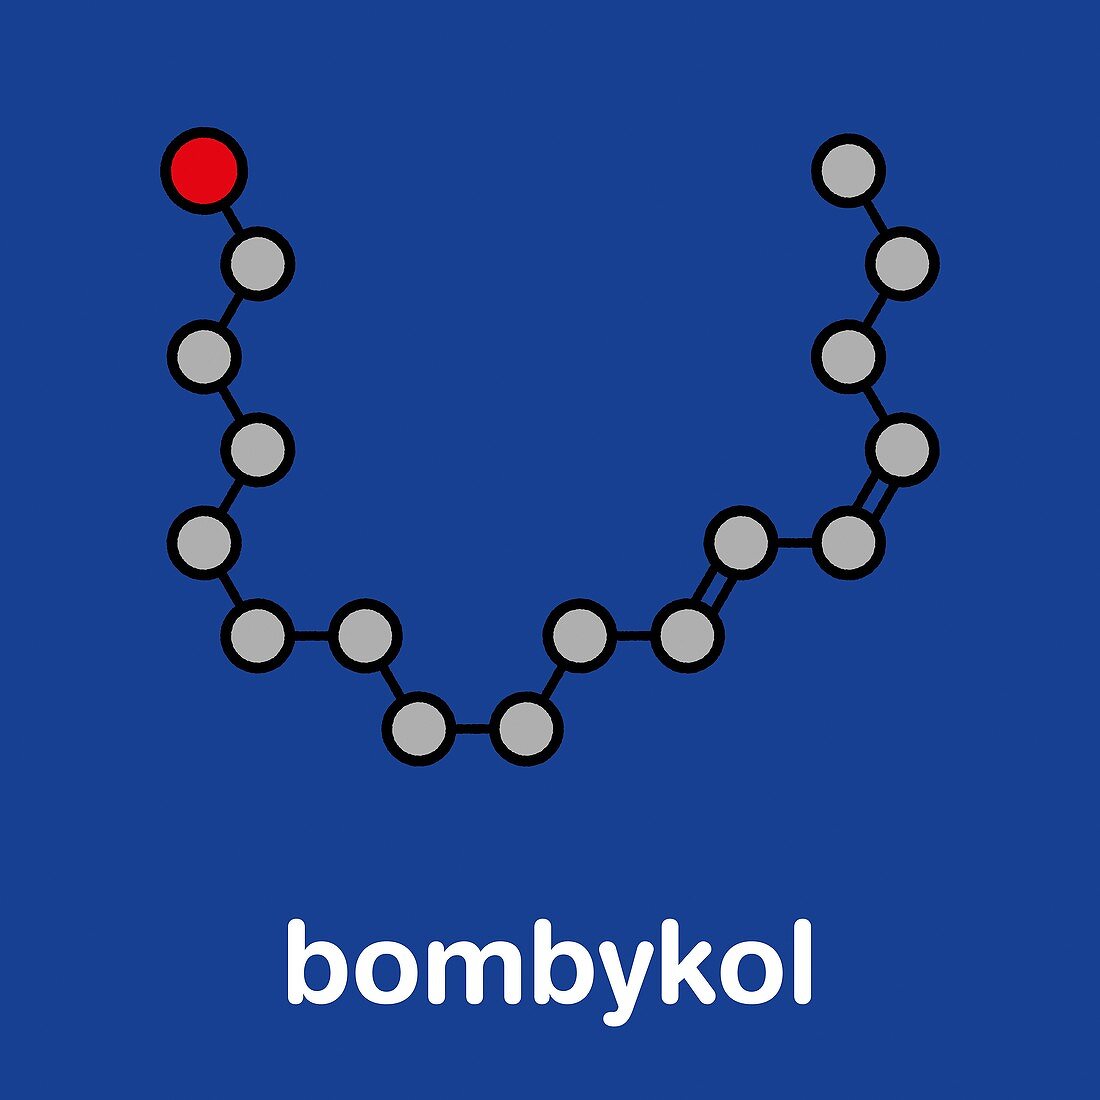 Bombykol insect pheromone molecule, illustration